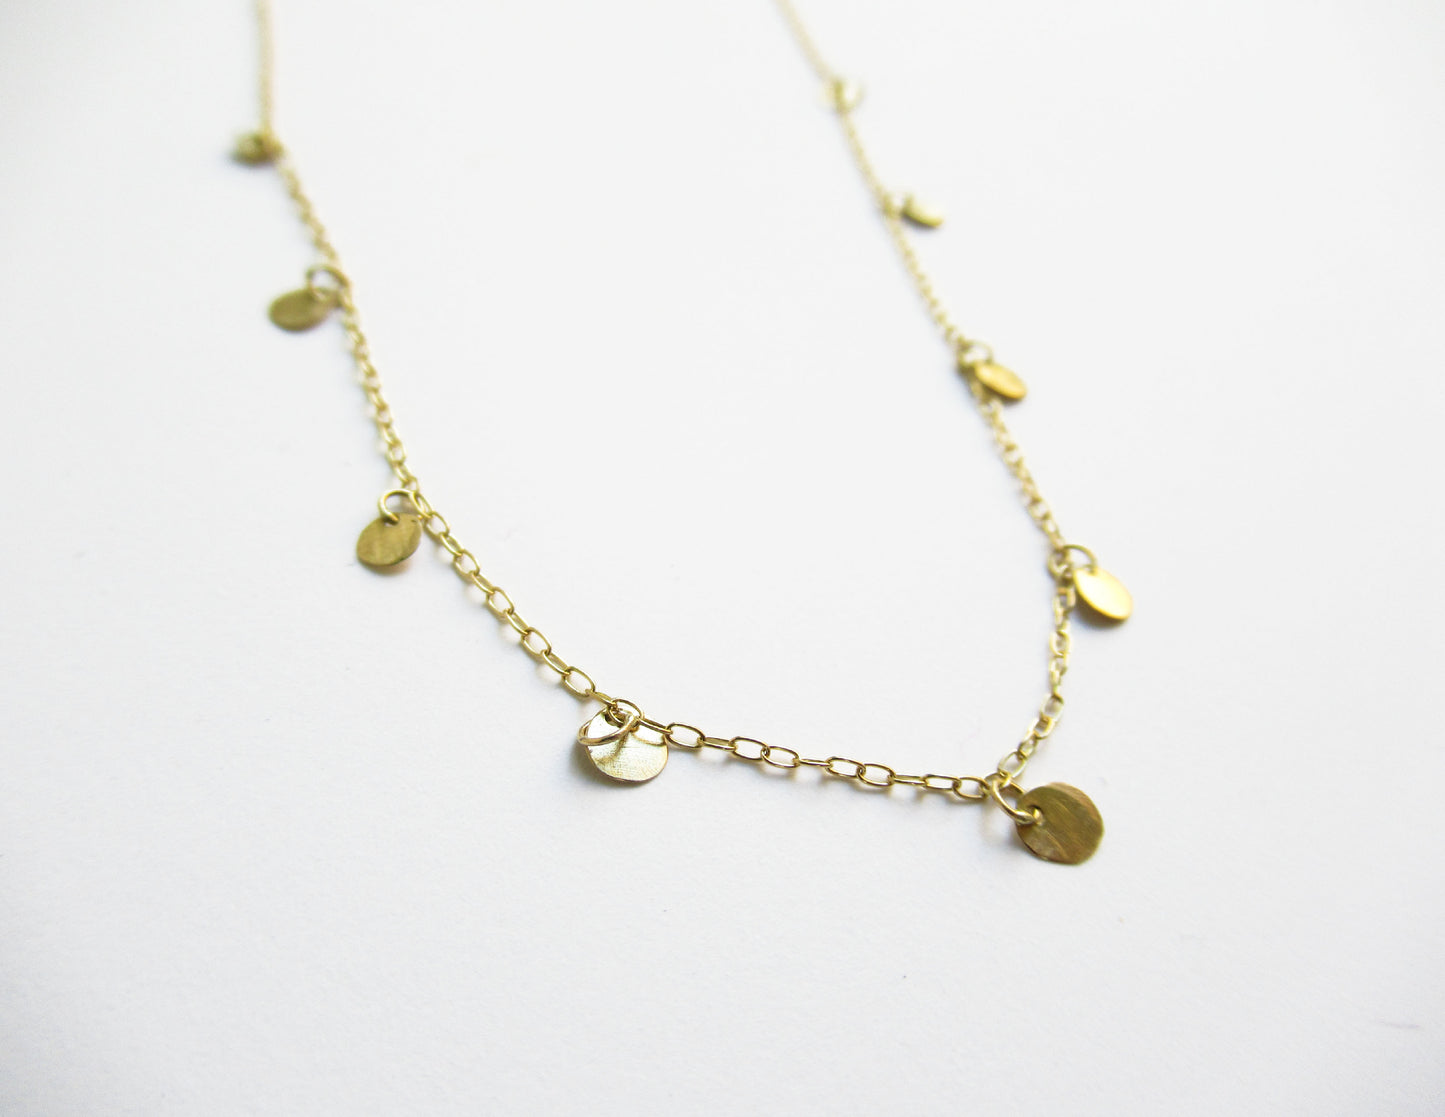 garland necklace 1 (K18/40cm)